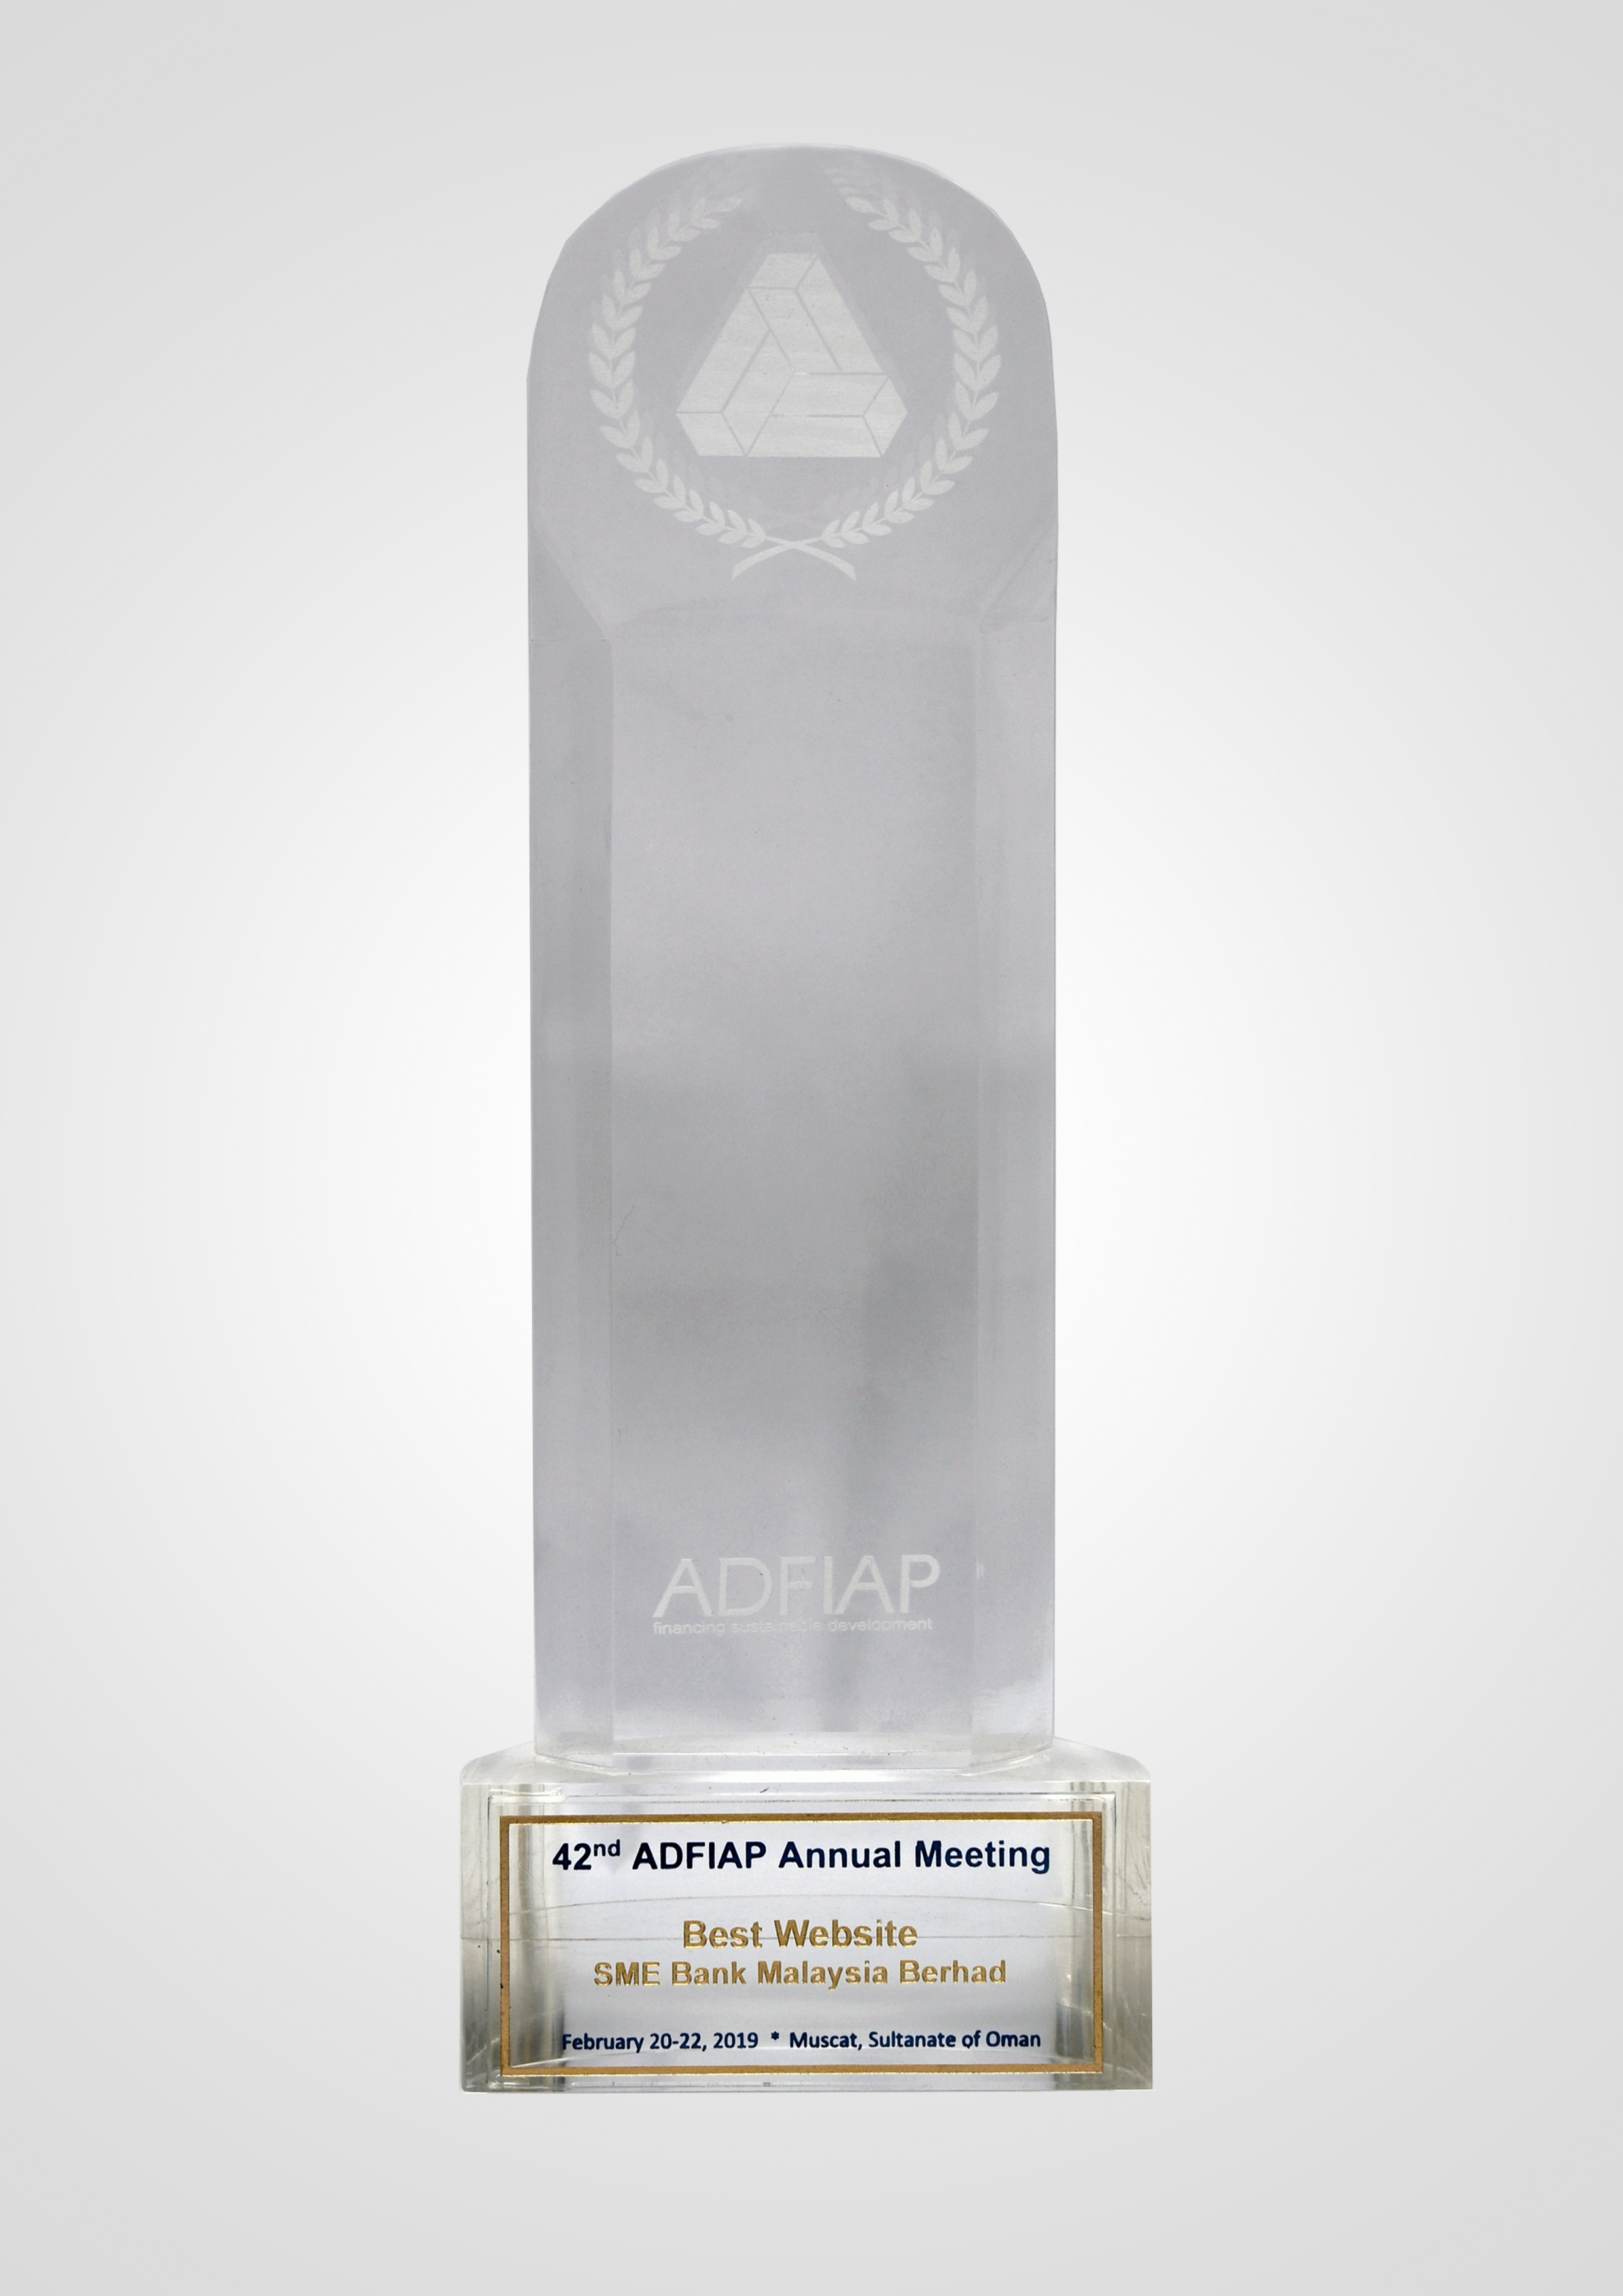 ADFIAP Awards 2019 - Special Awards - Best Website